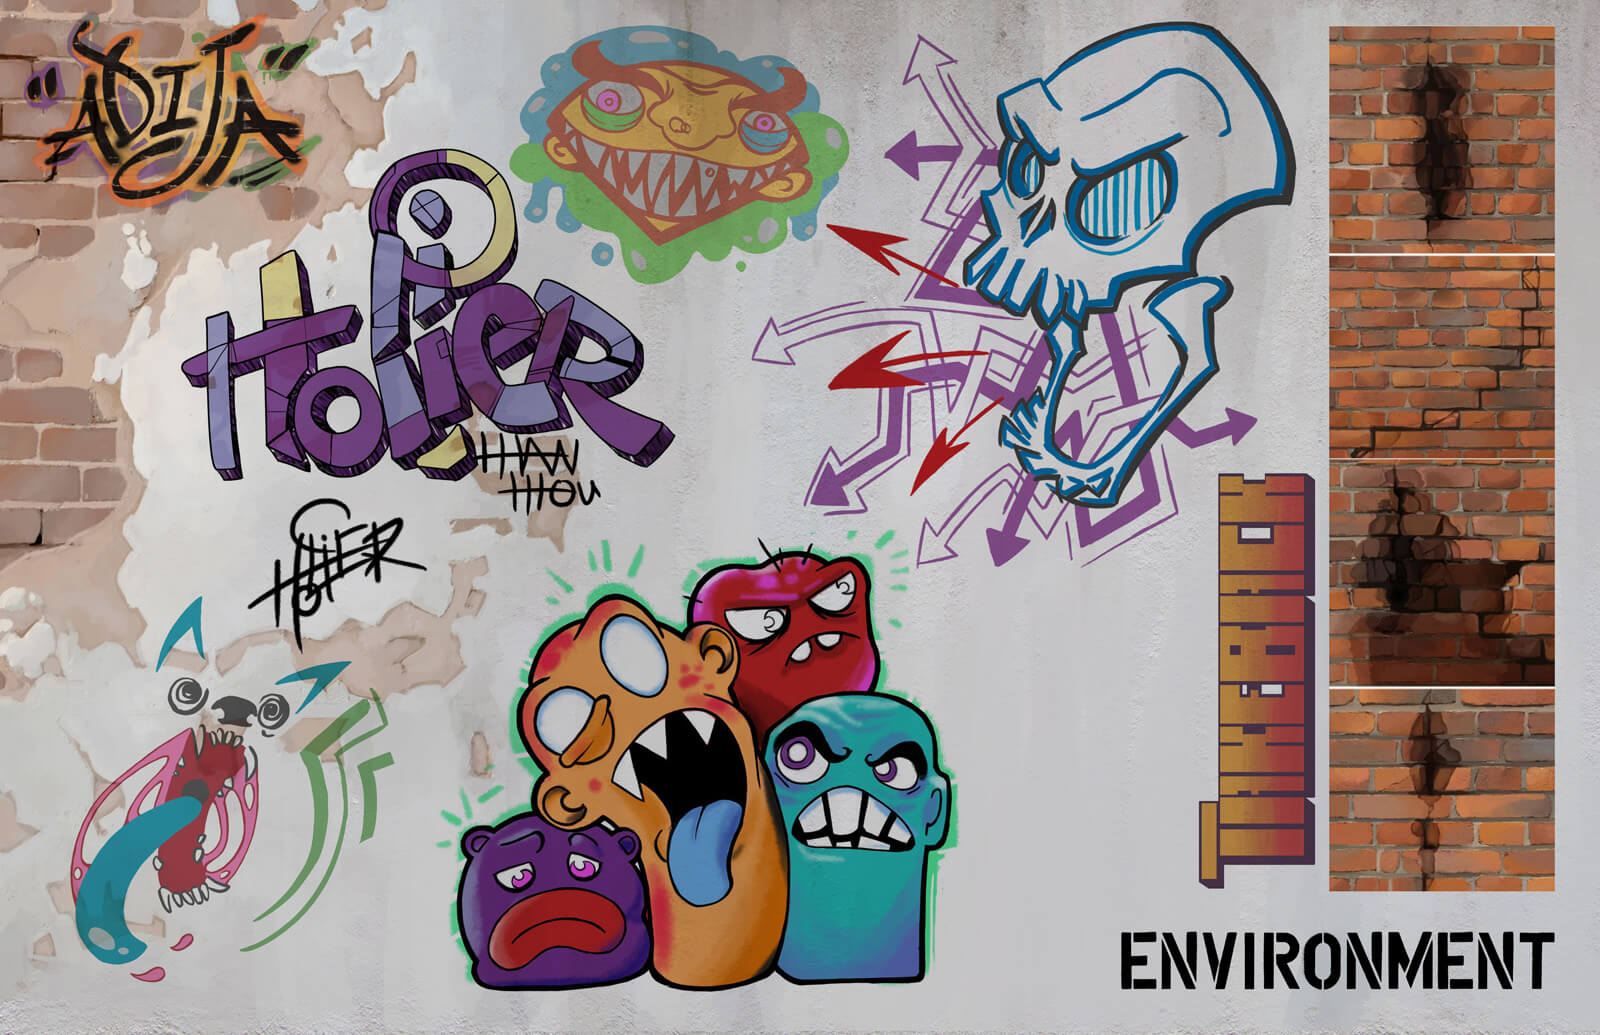 Environmental design sheet showing color drawings of the various graffiti and walls in the film Adija